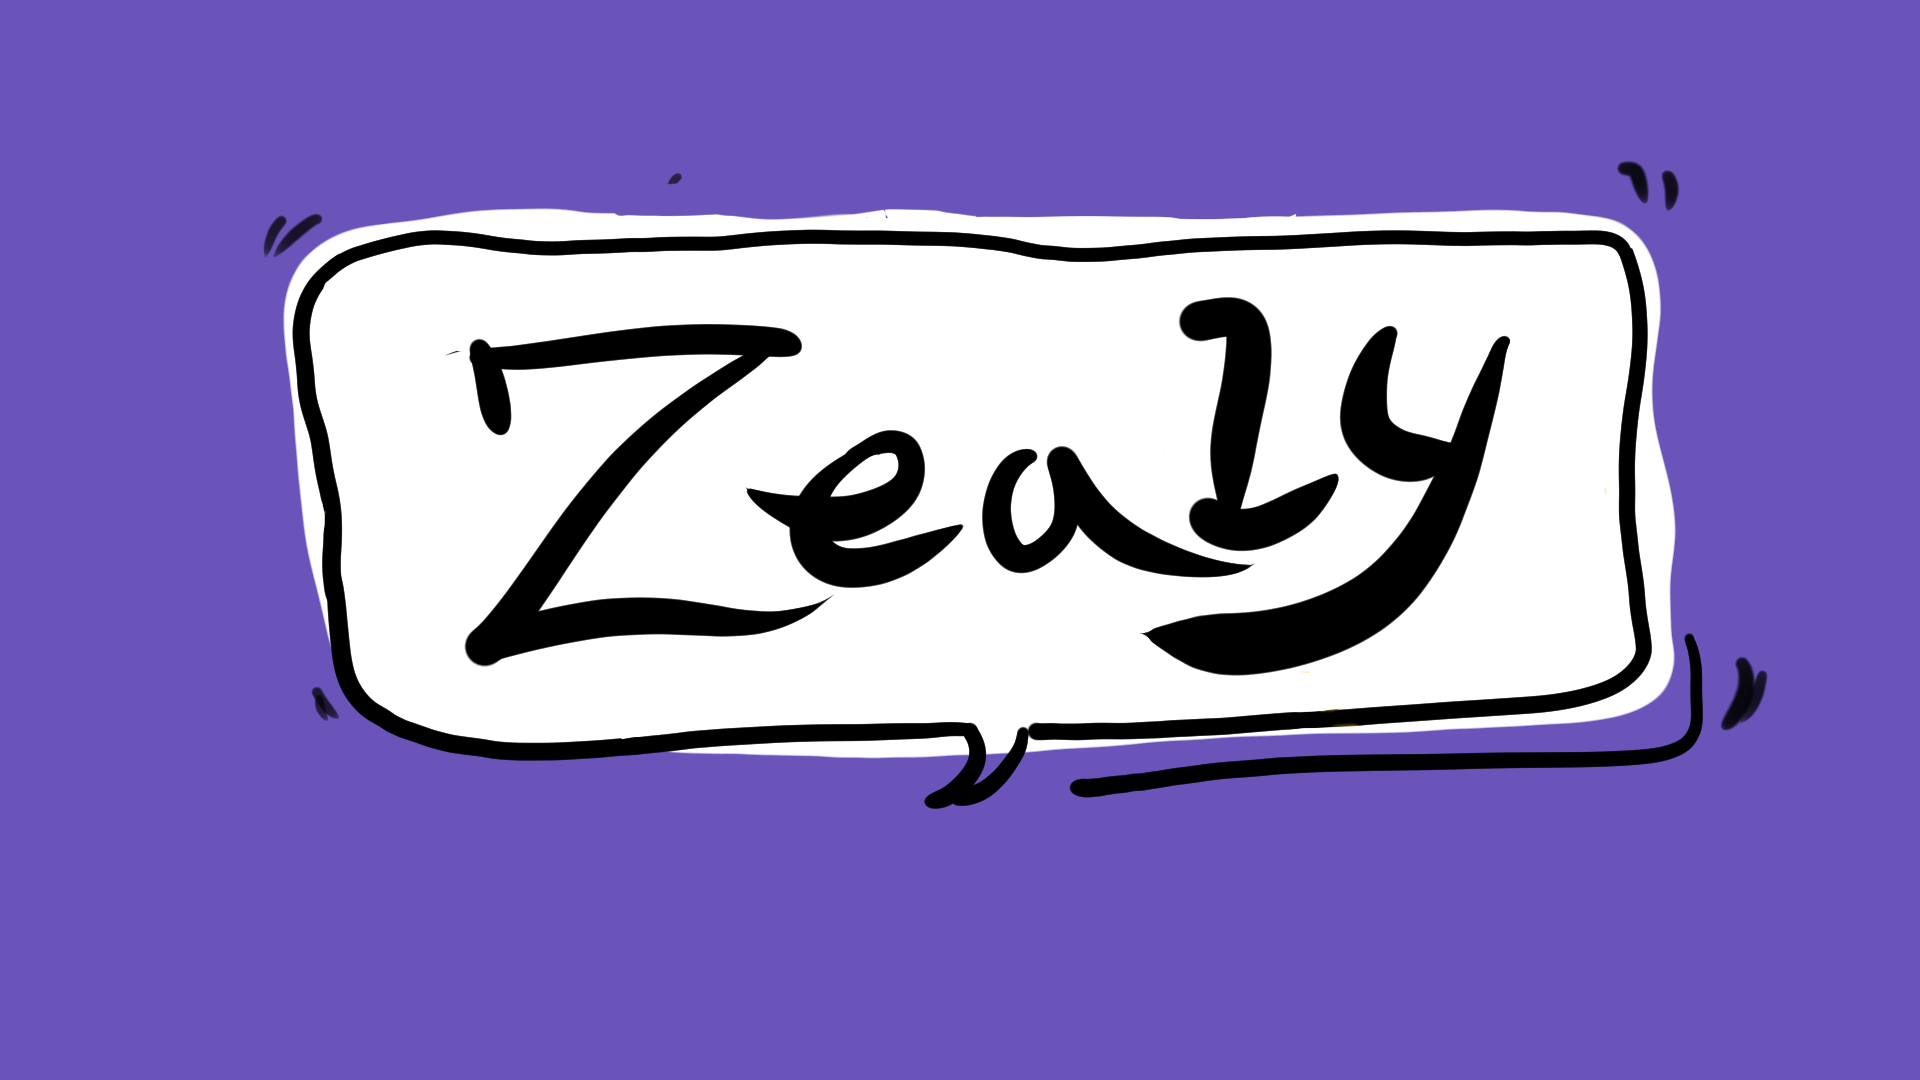 پلتفرم زیلی (Zealy) چیست؟